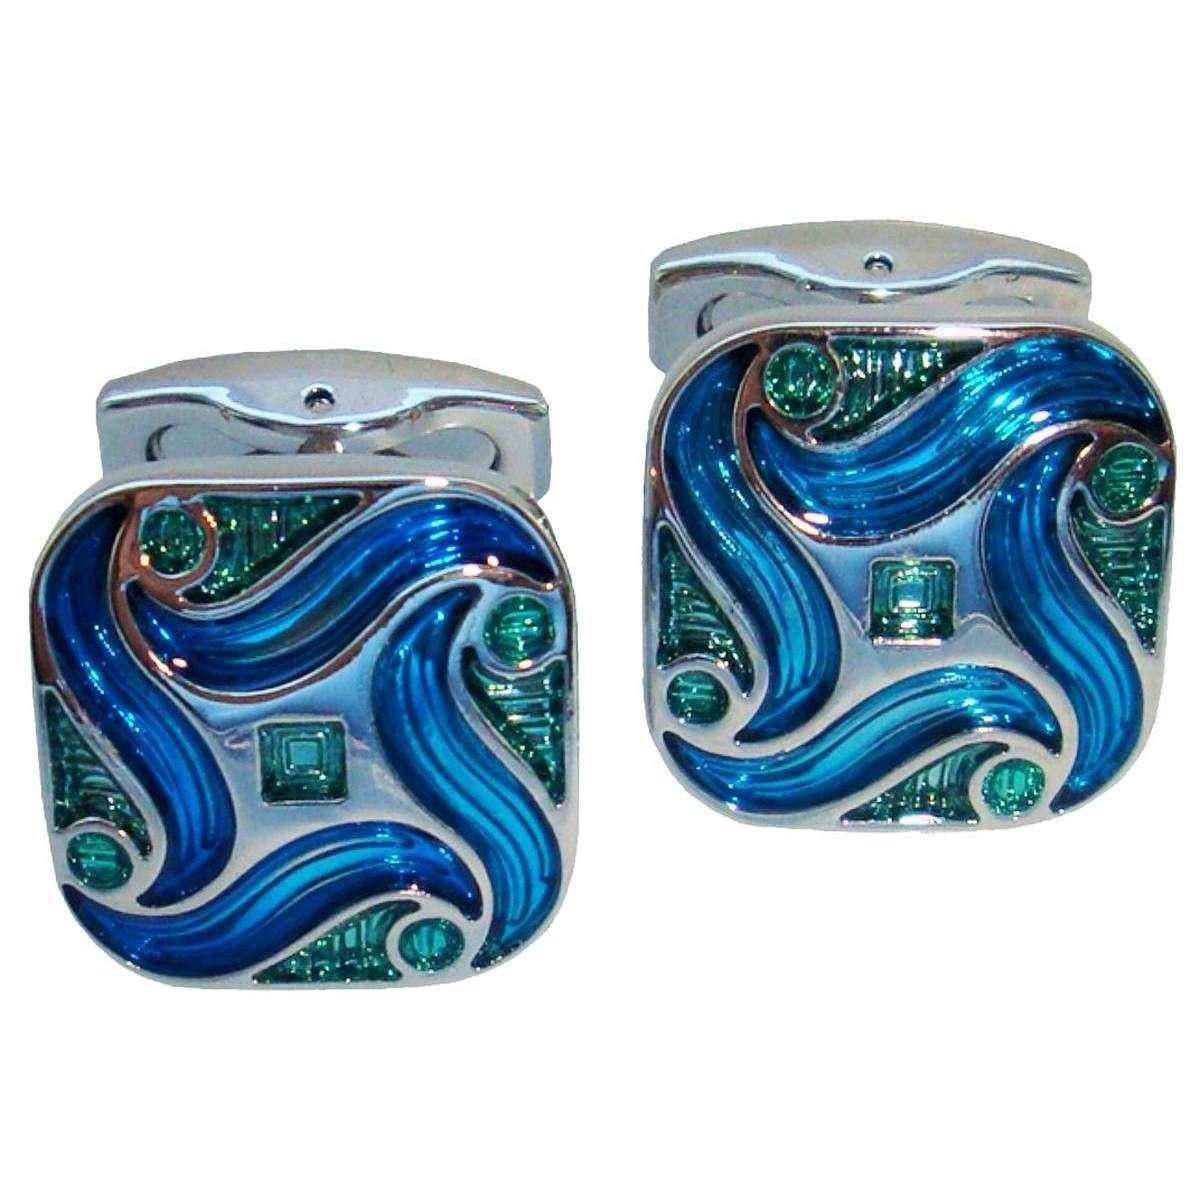 Bassin and Brown Art Nouveau Enamel Cufflinks - Blue/Green/Silver